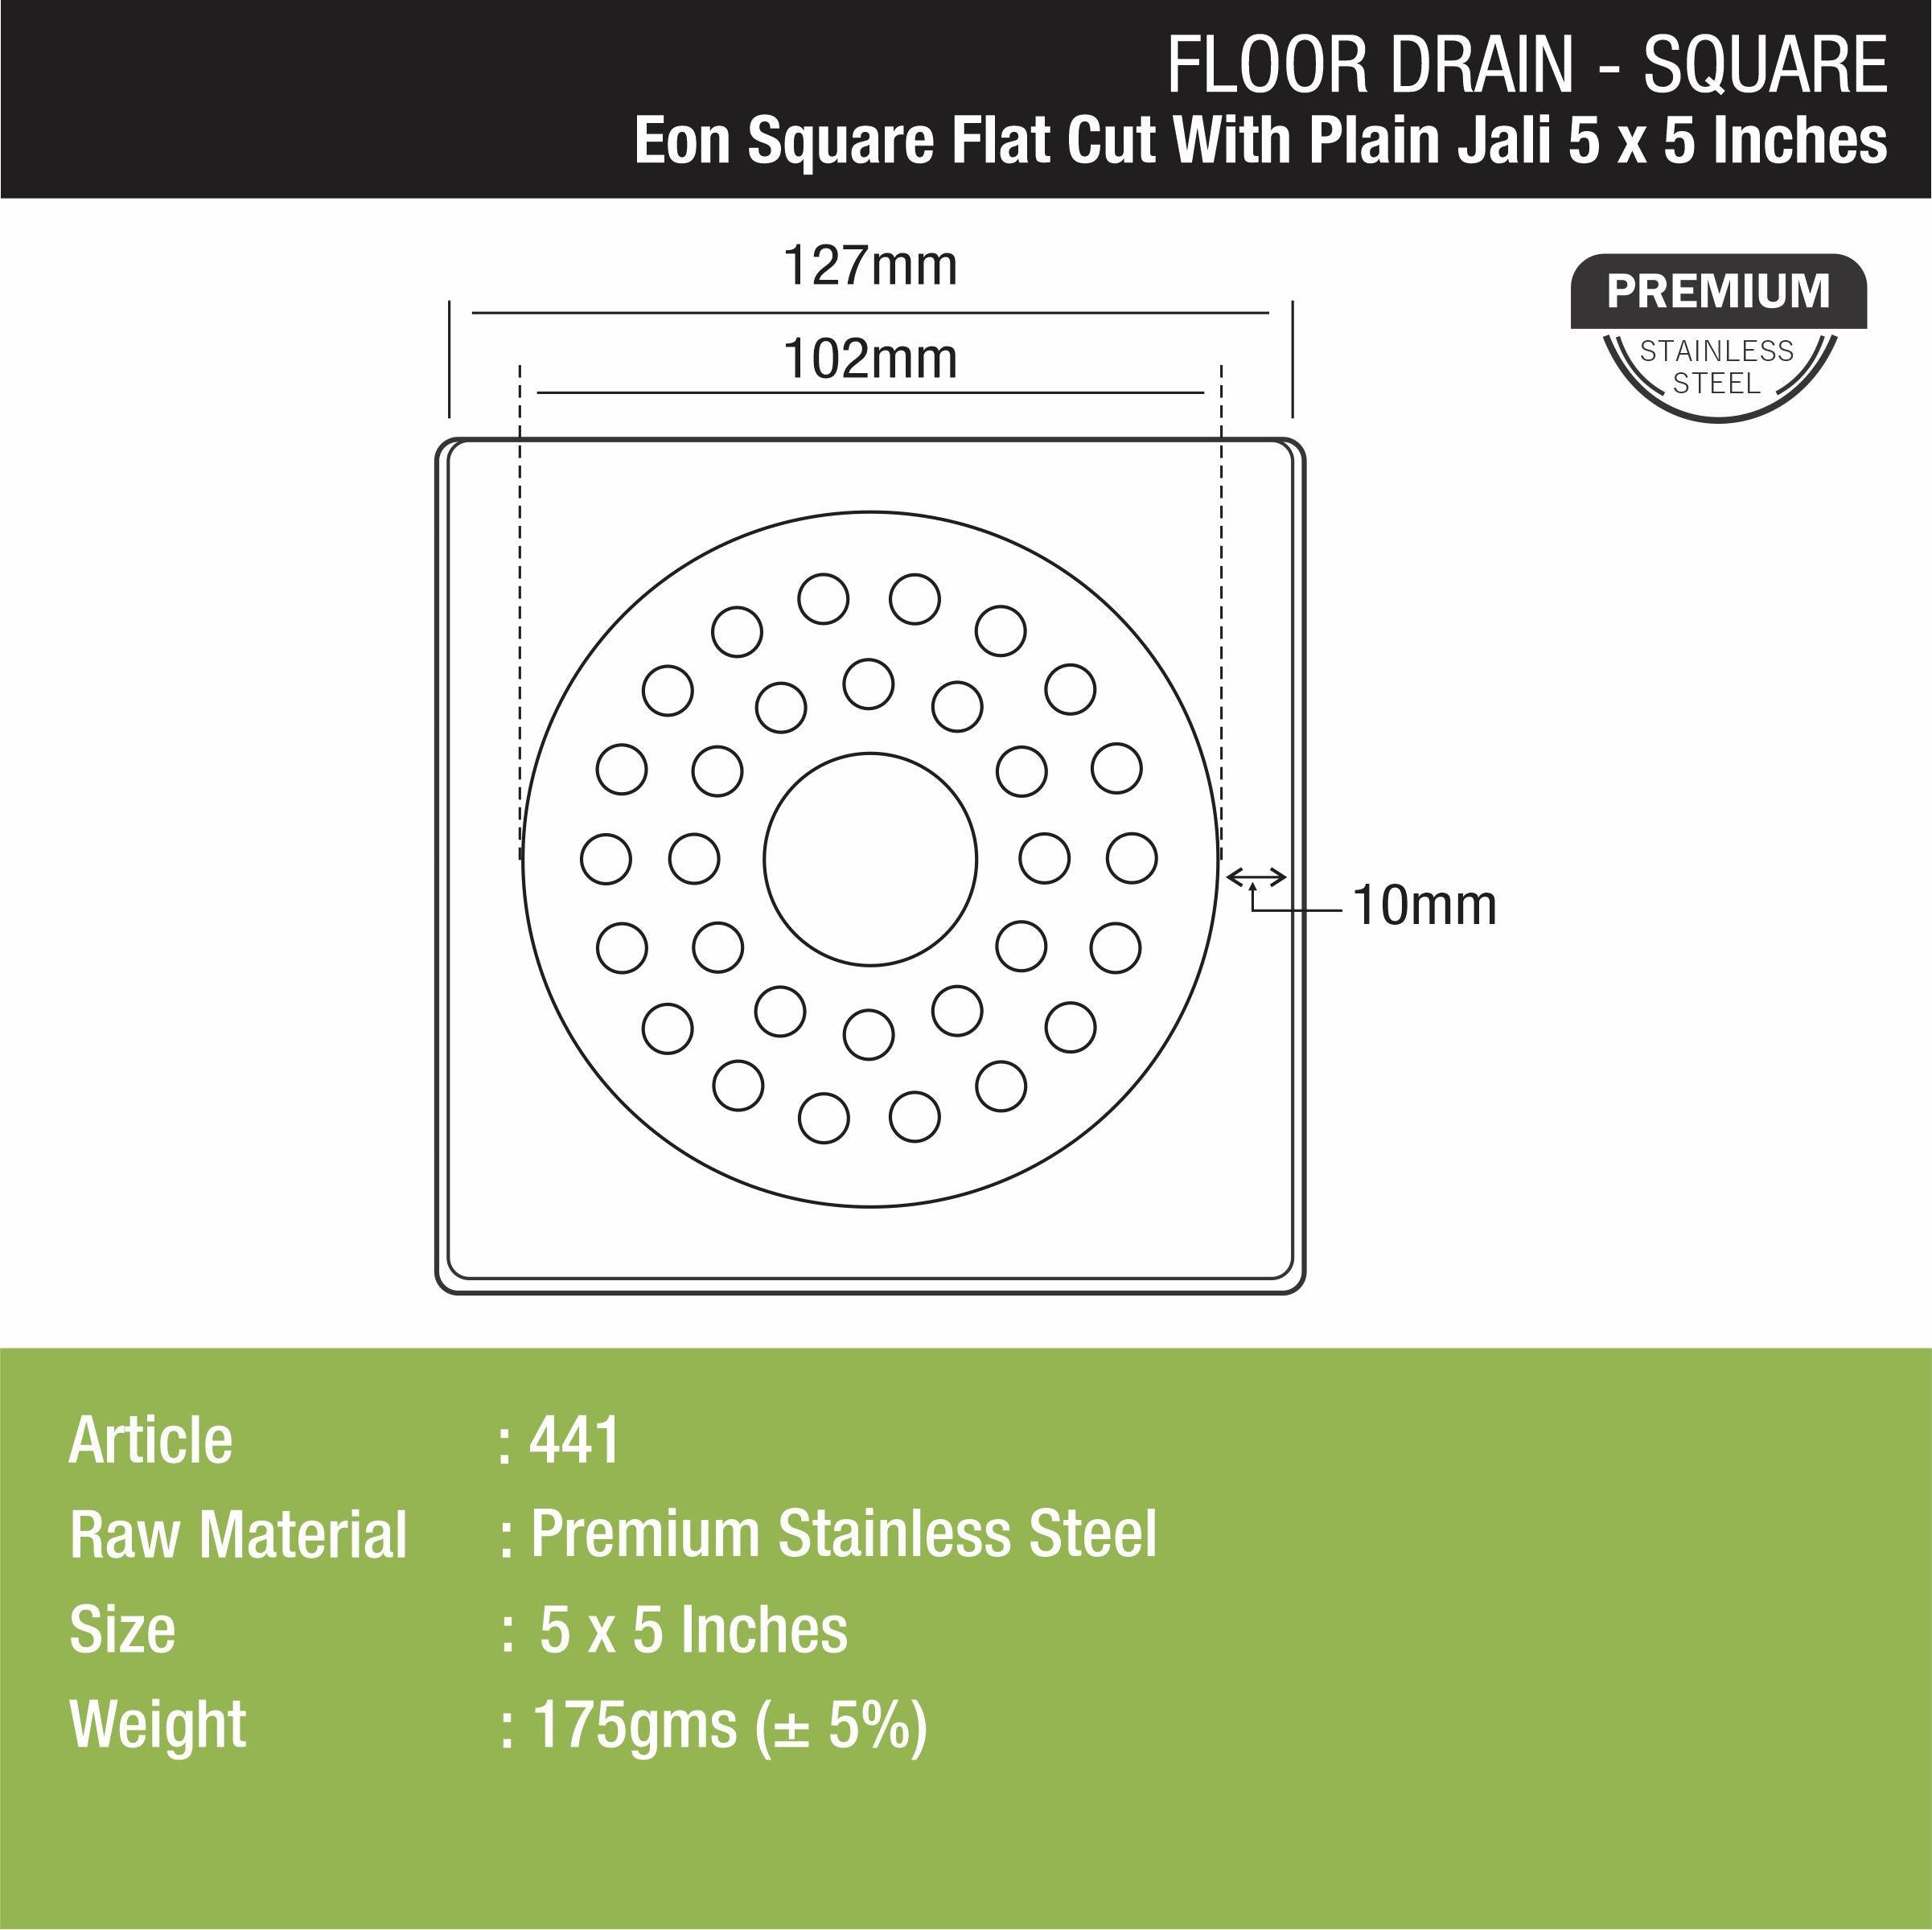 Eon Square Flat Cut Floor Drain with Plain Jali and Hole (5 x 5 Inches) - LIPKA - Lipka Home